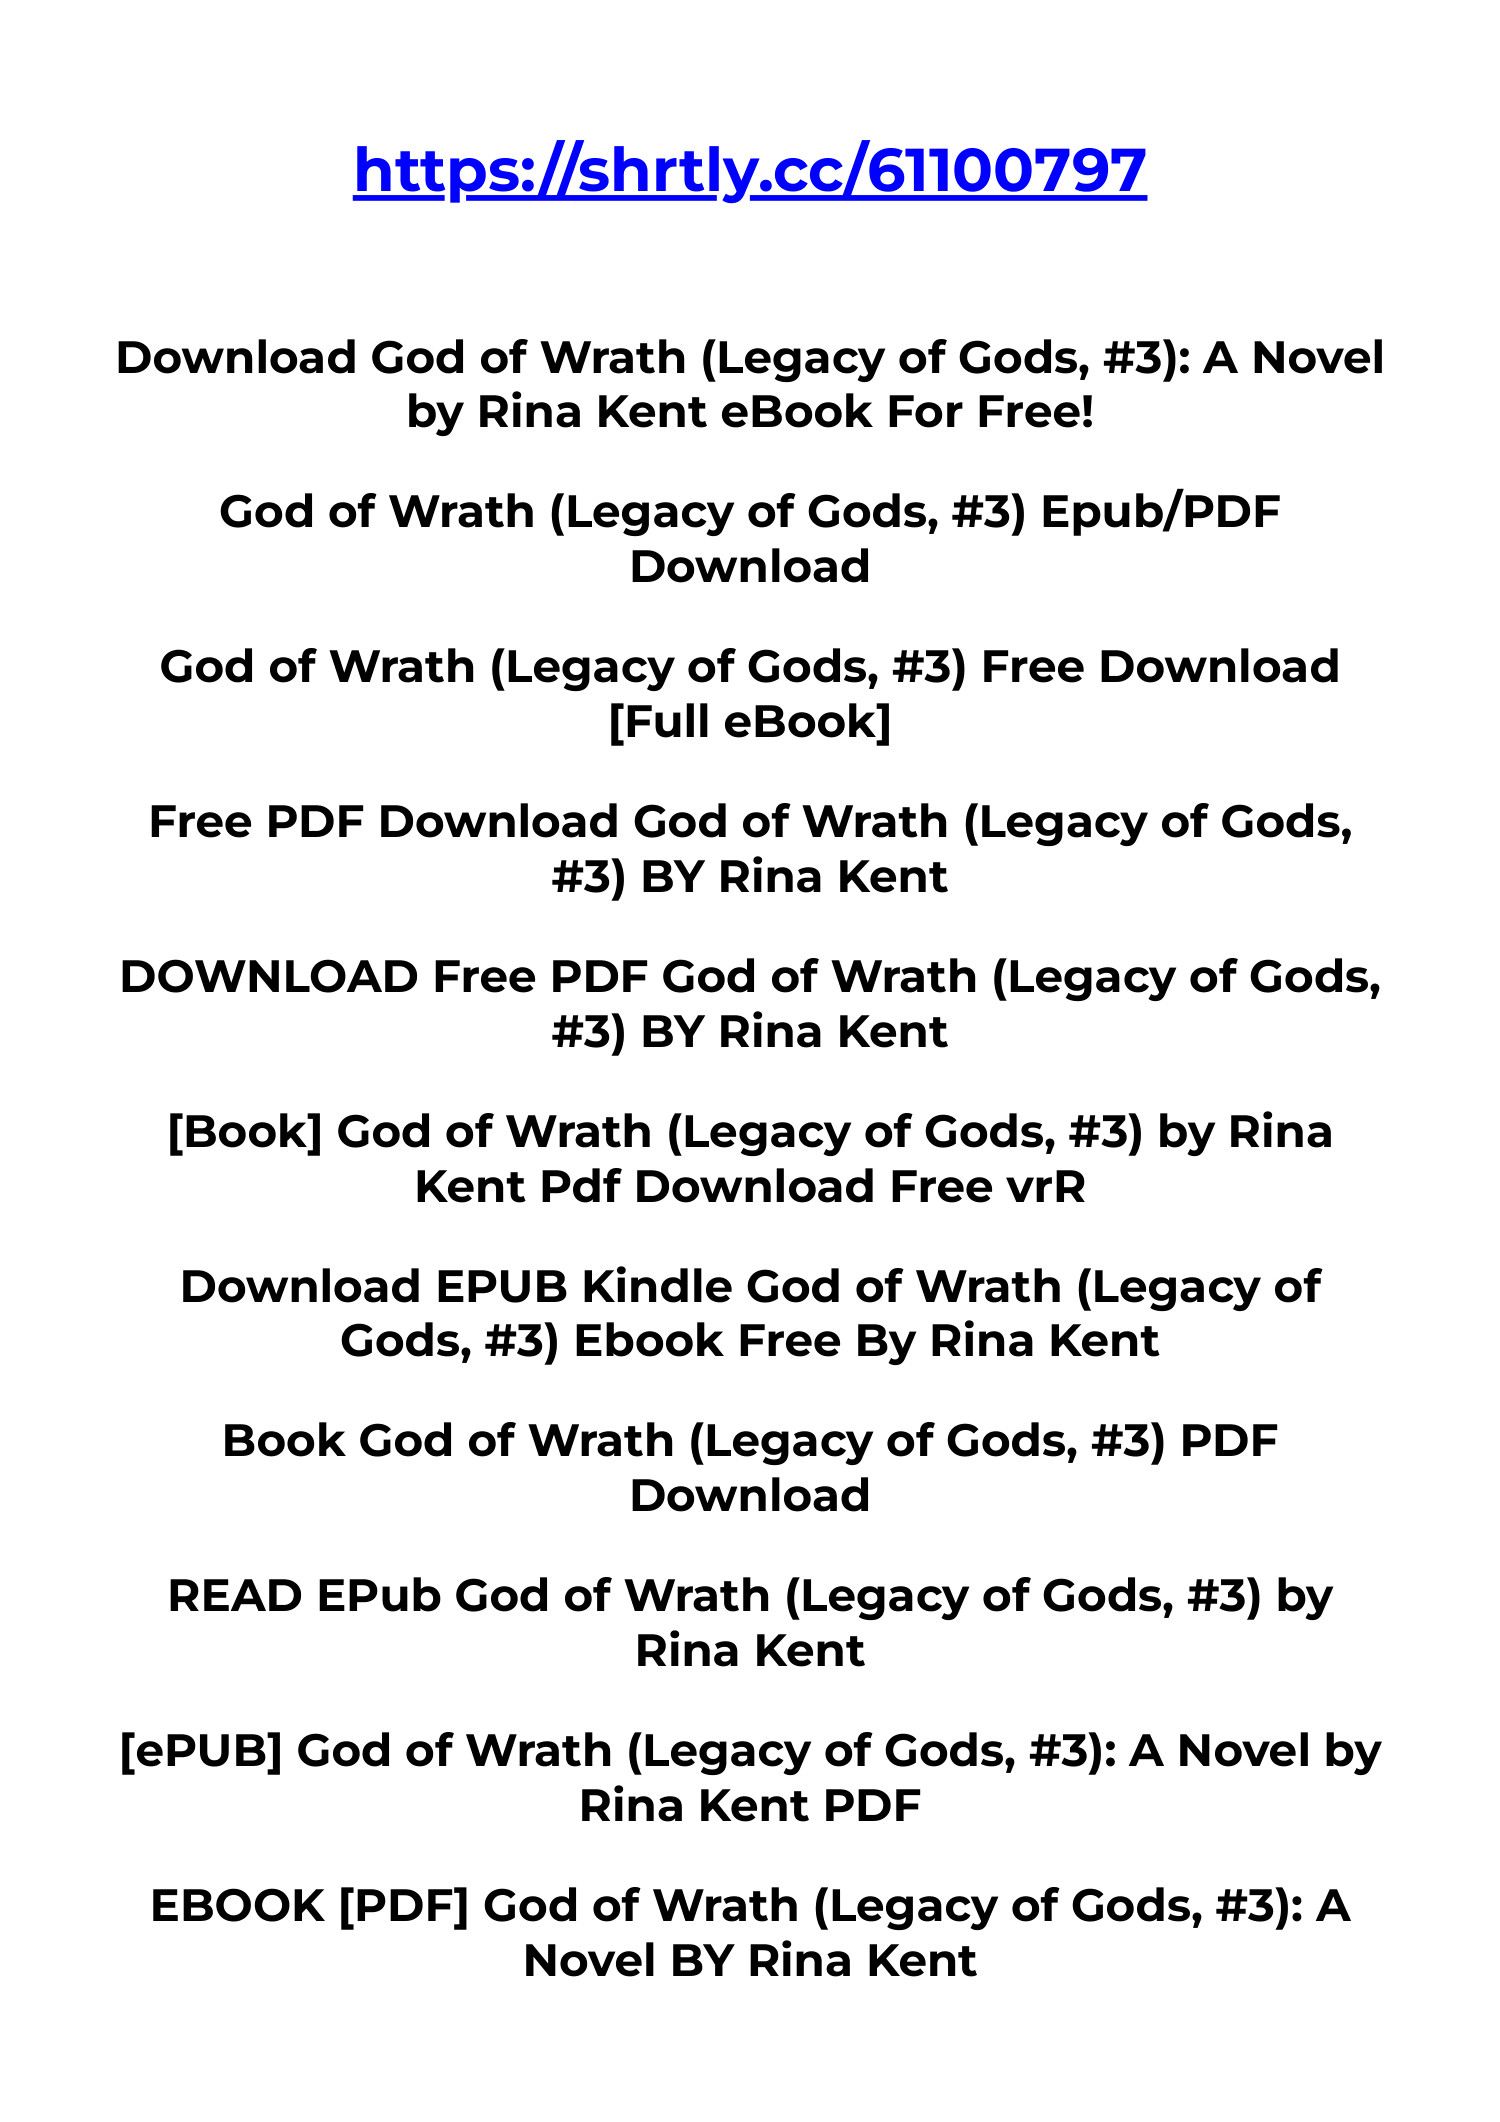 God of Wrath (Legacy of Gods, #3) by Rina Kent